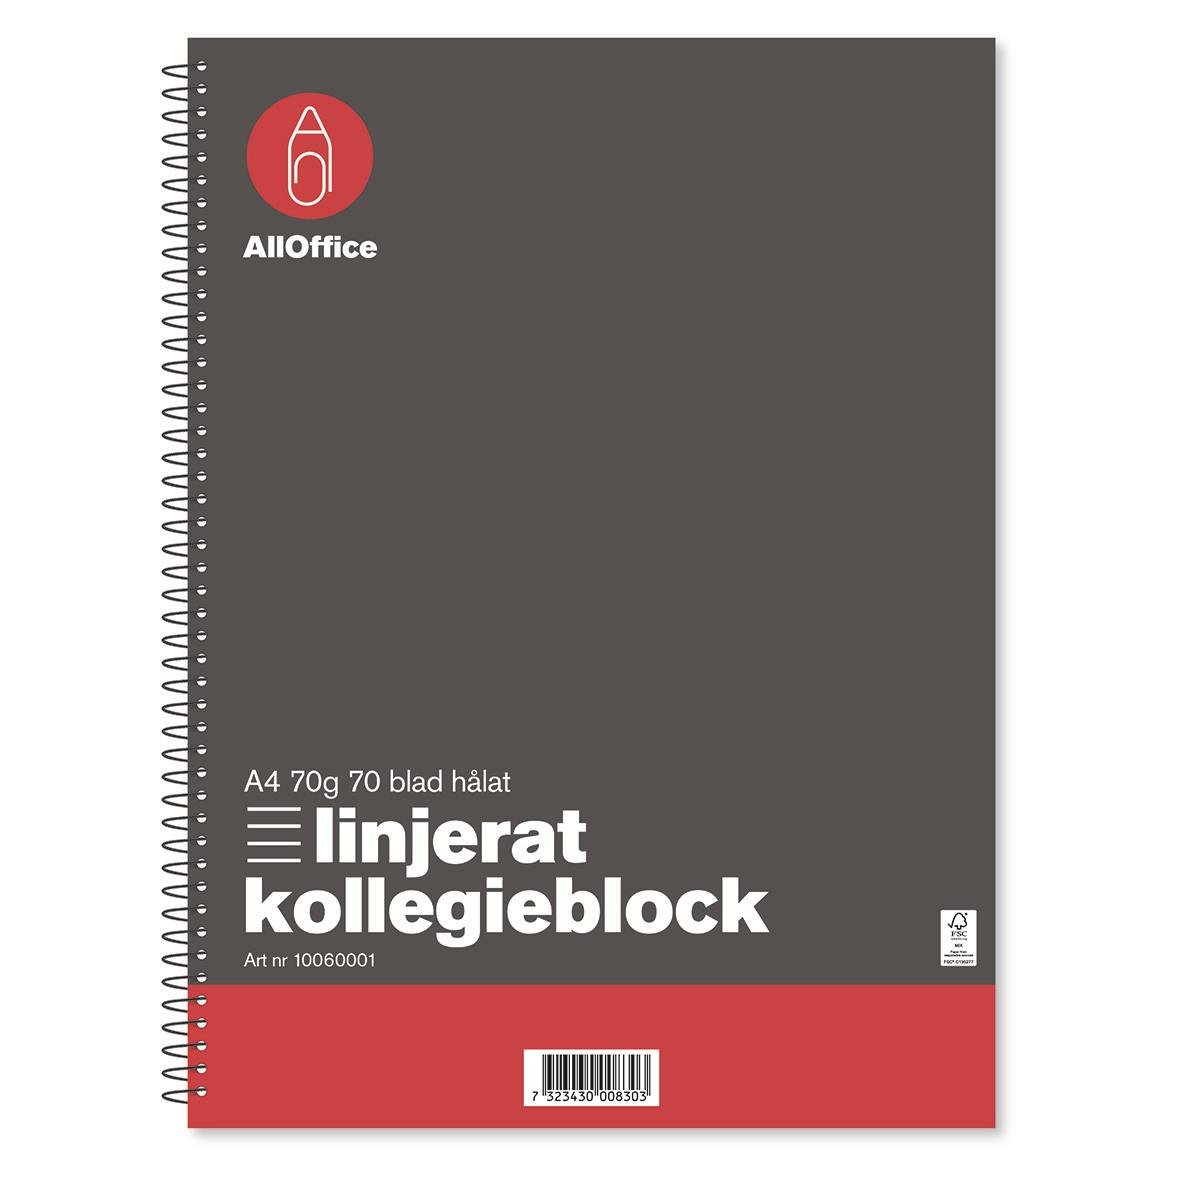 Kollegieblock AllOffice A4 70 gram